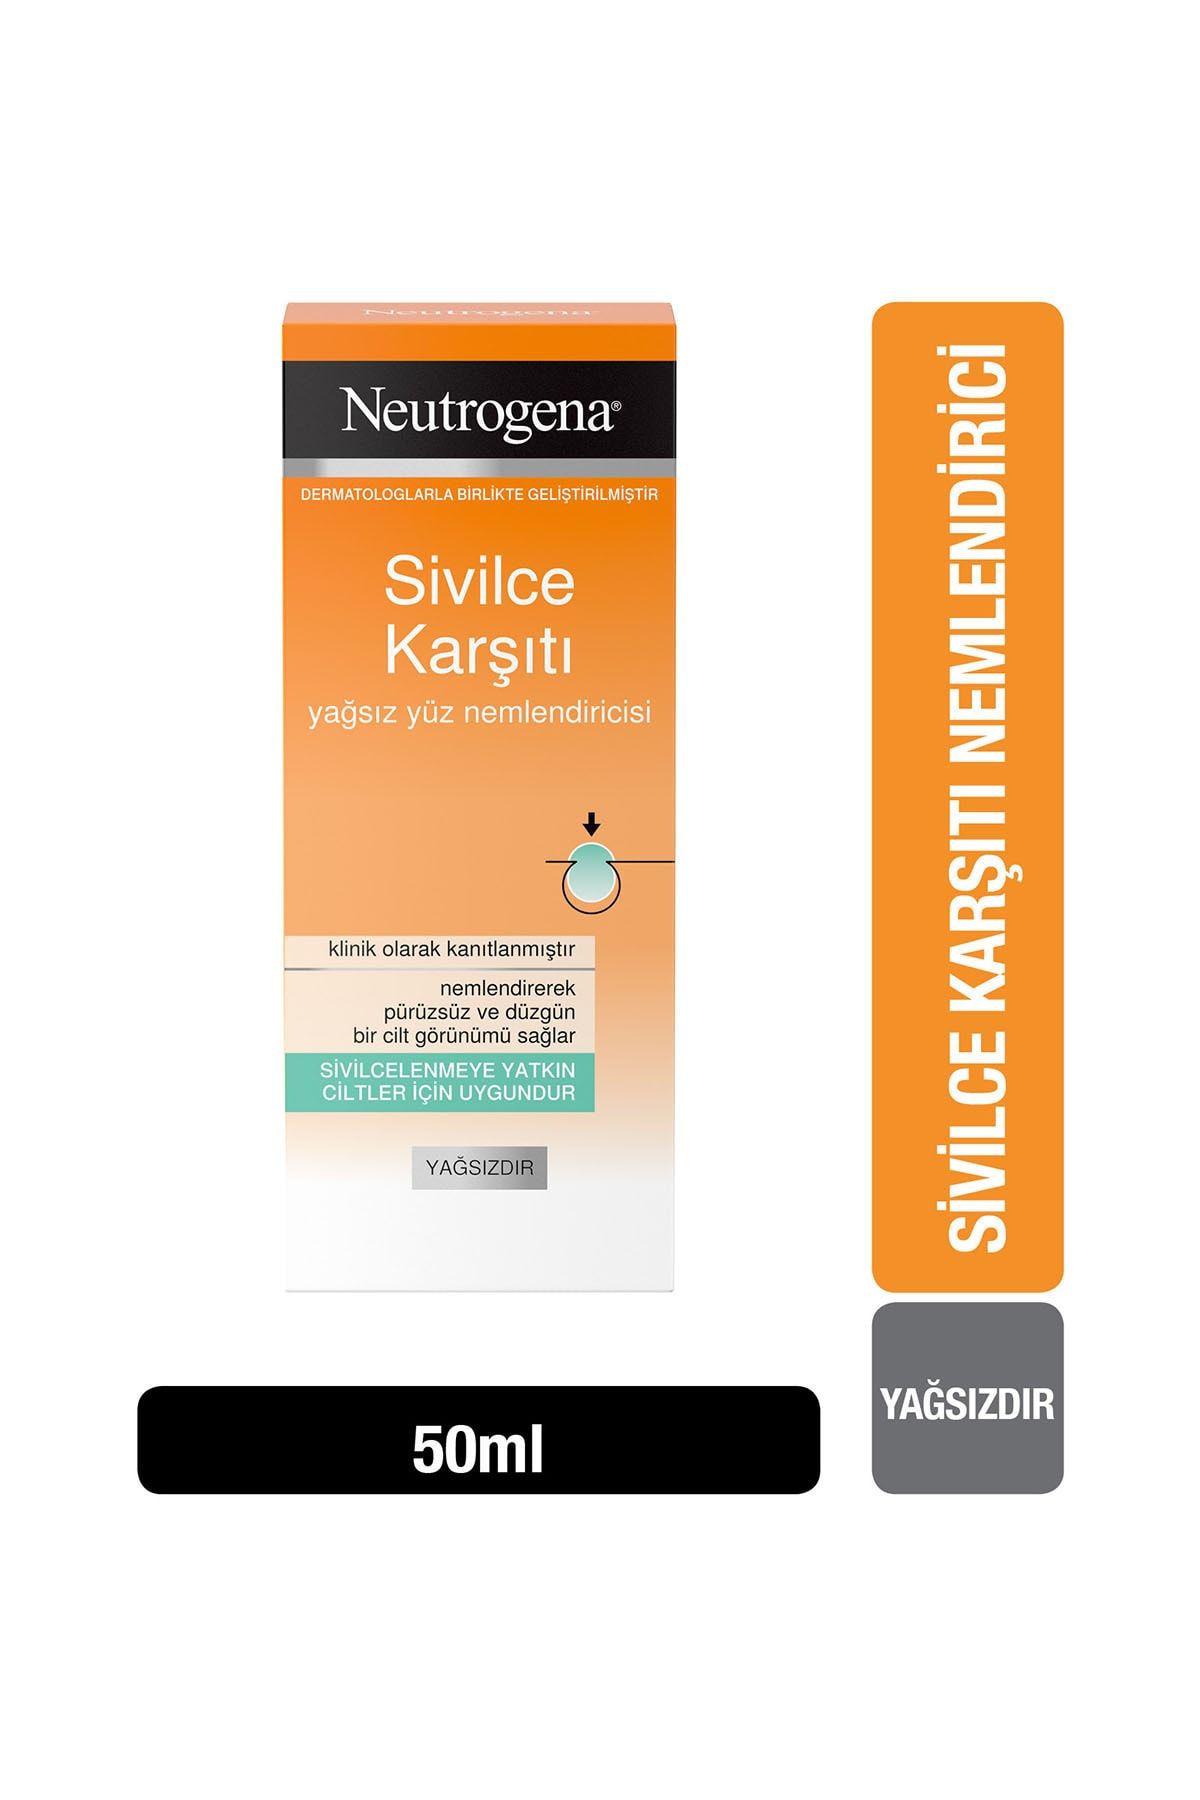 Neutrogena Visibly Clear Nemlendirici 50 ml